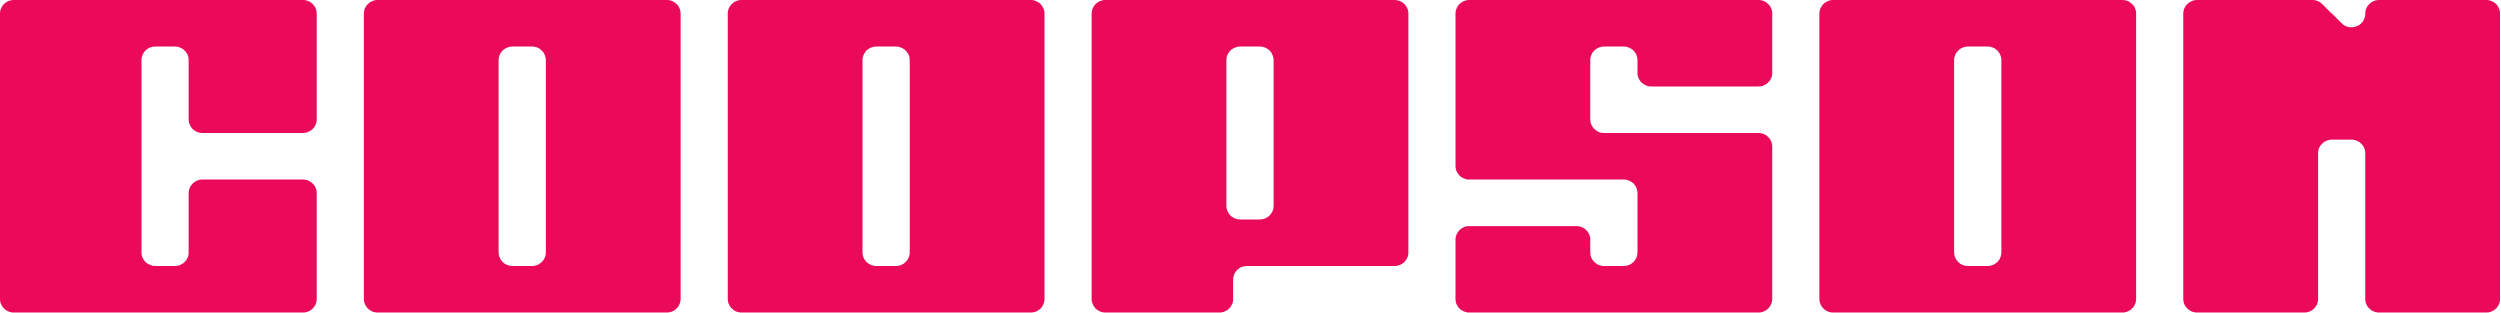 coopson logo pink